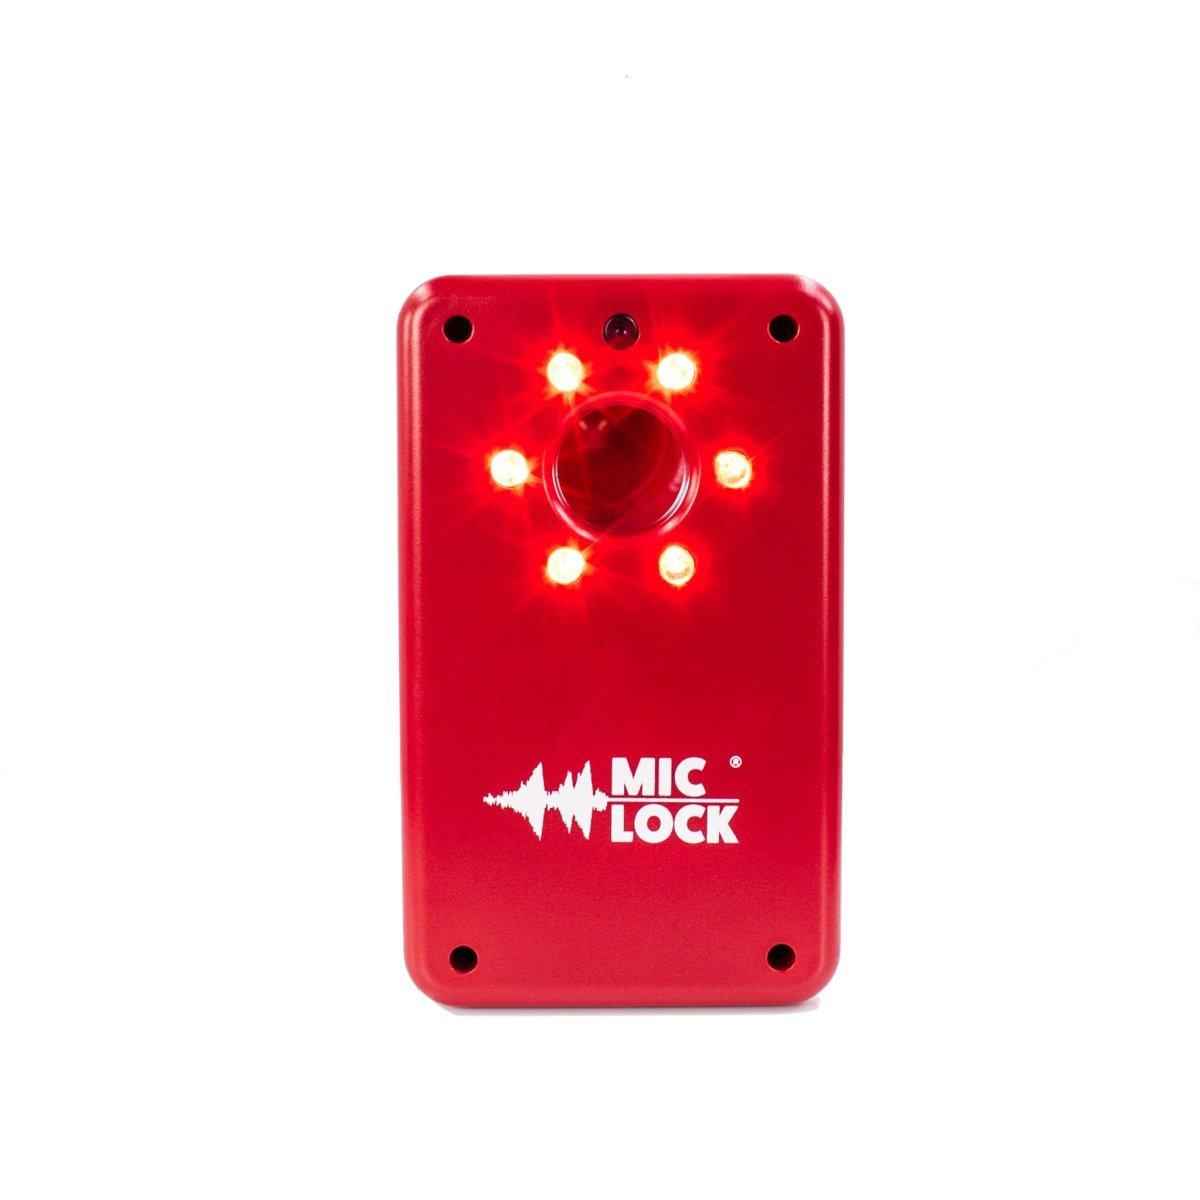 Mic-Lock Camera Finder Pro, Hidden Device Detector with Faraday Bag Bundle - Mic-Lock